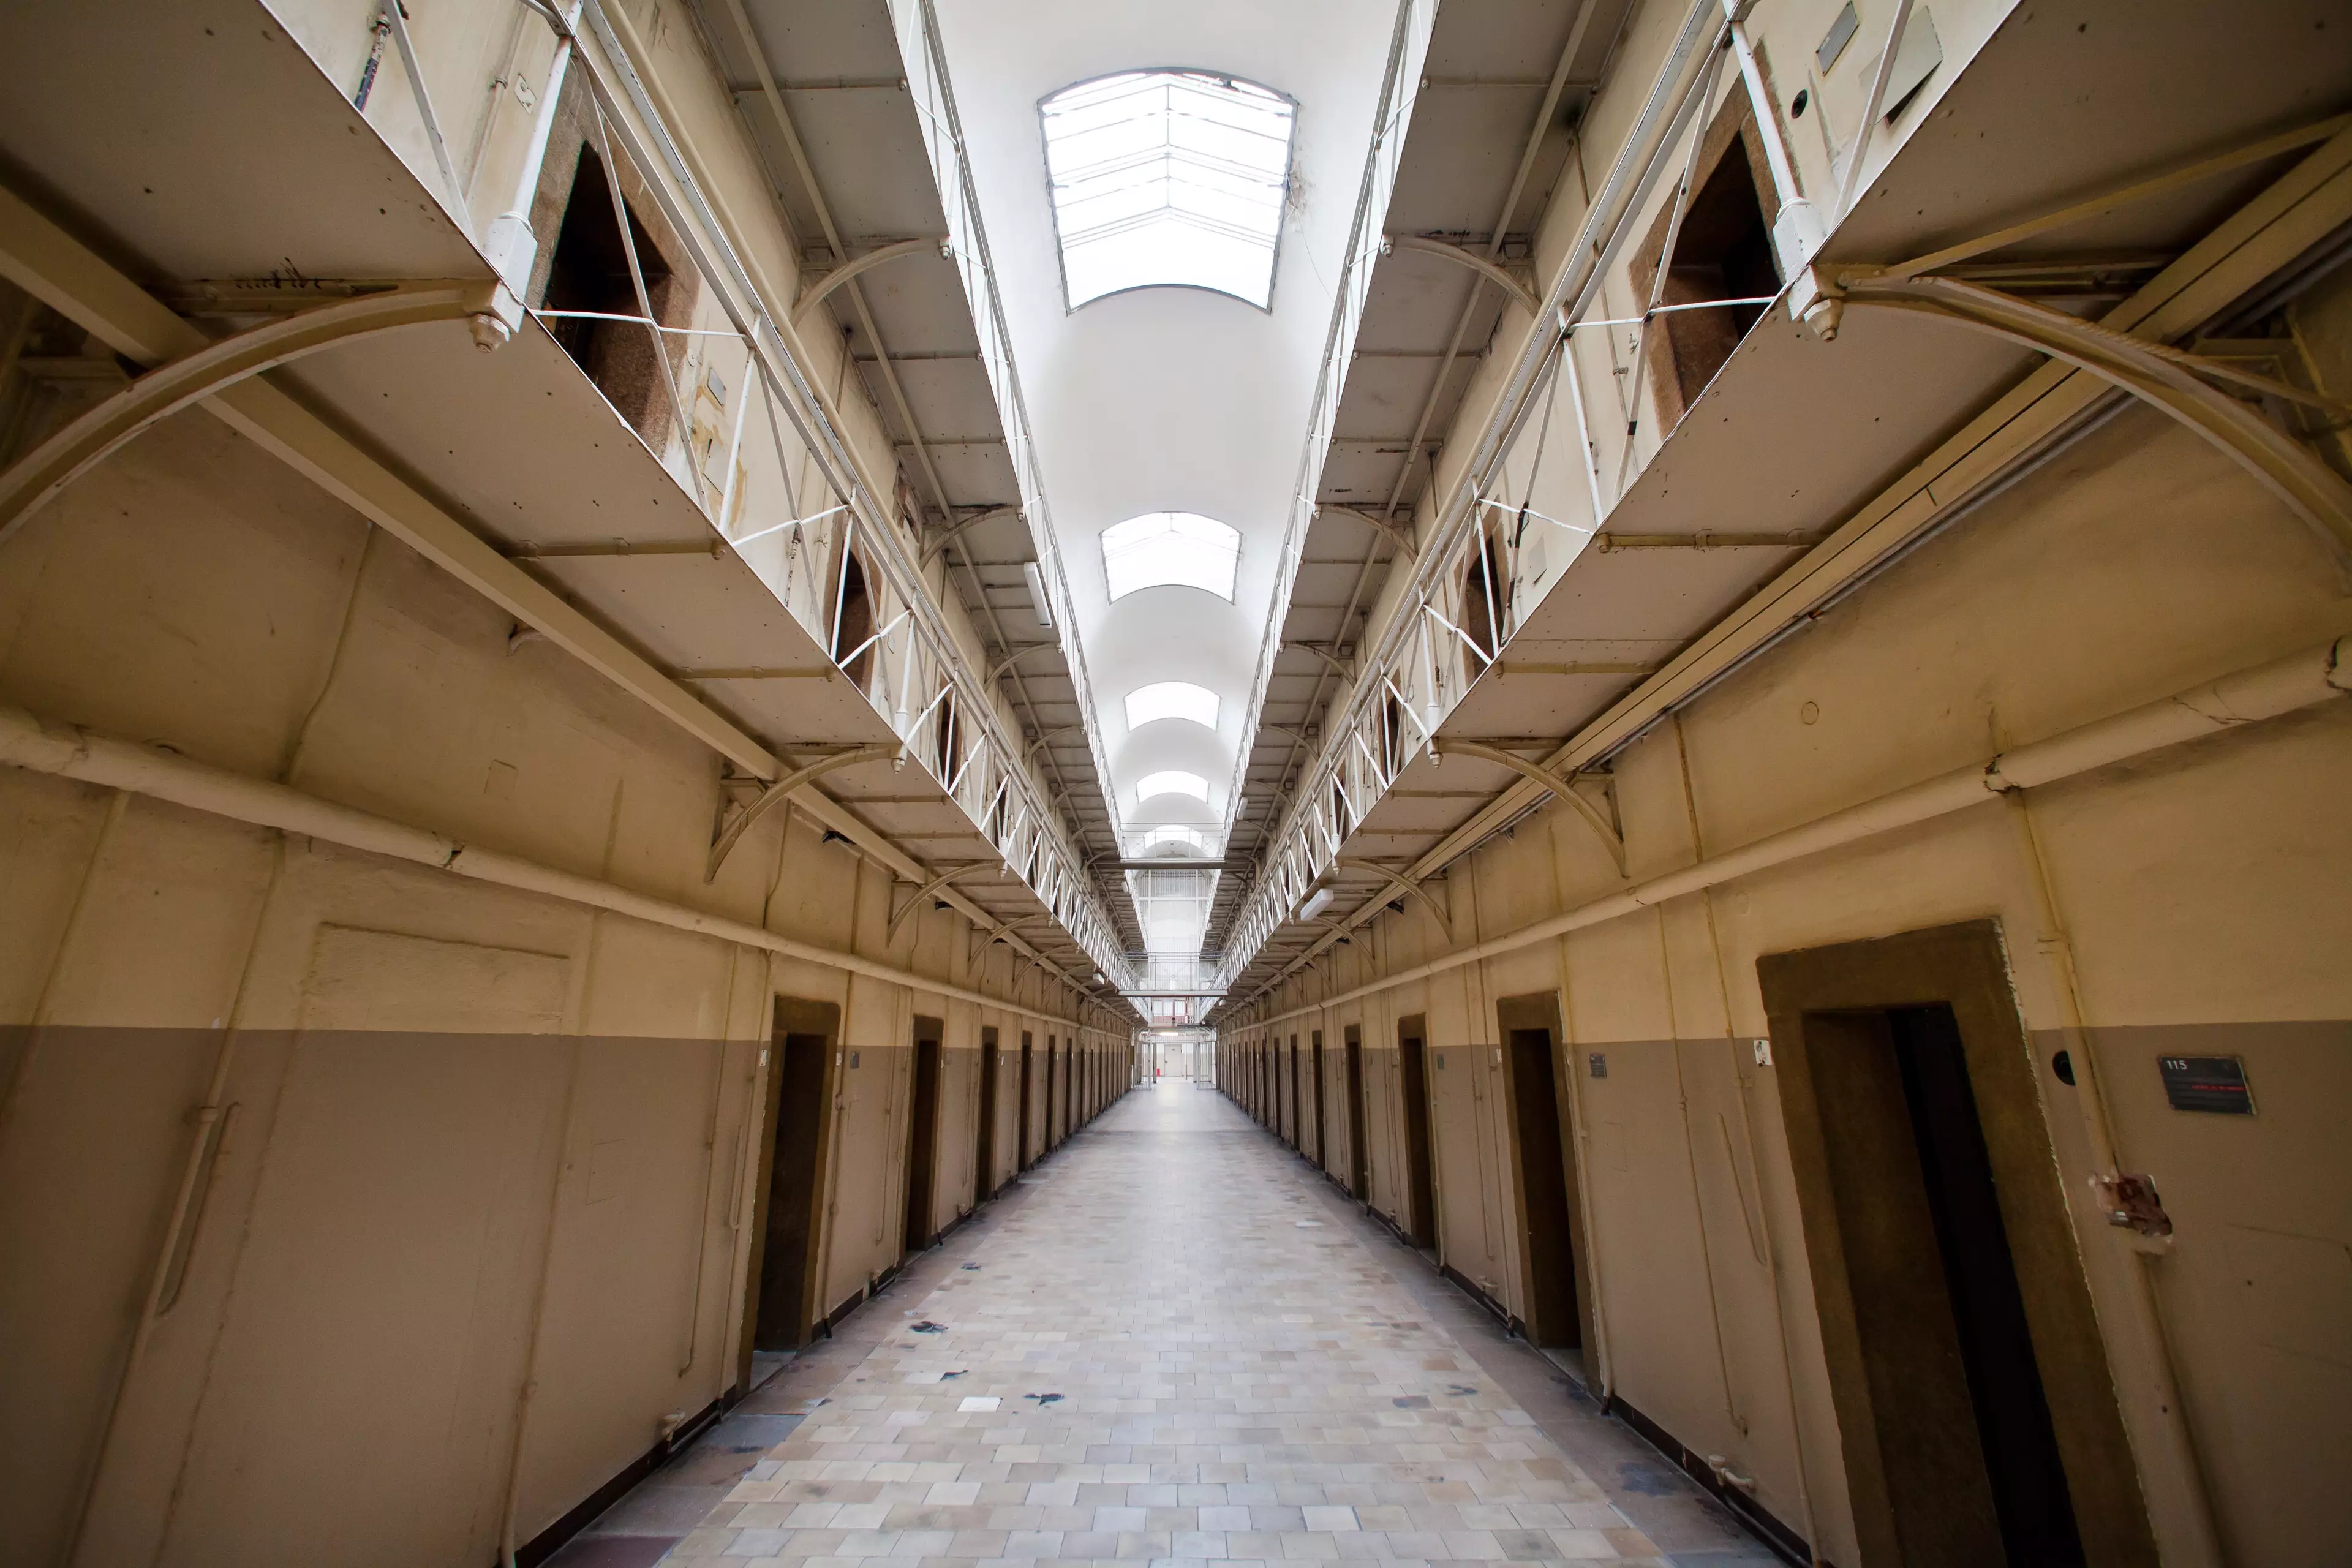 Stock image of prison.